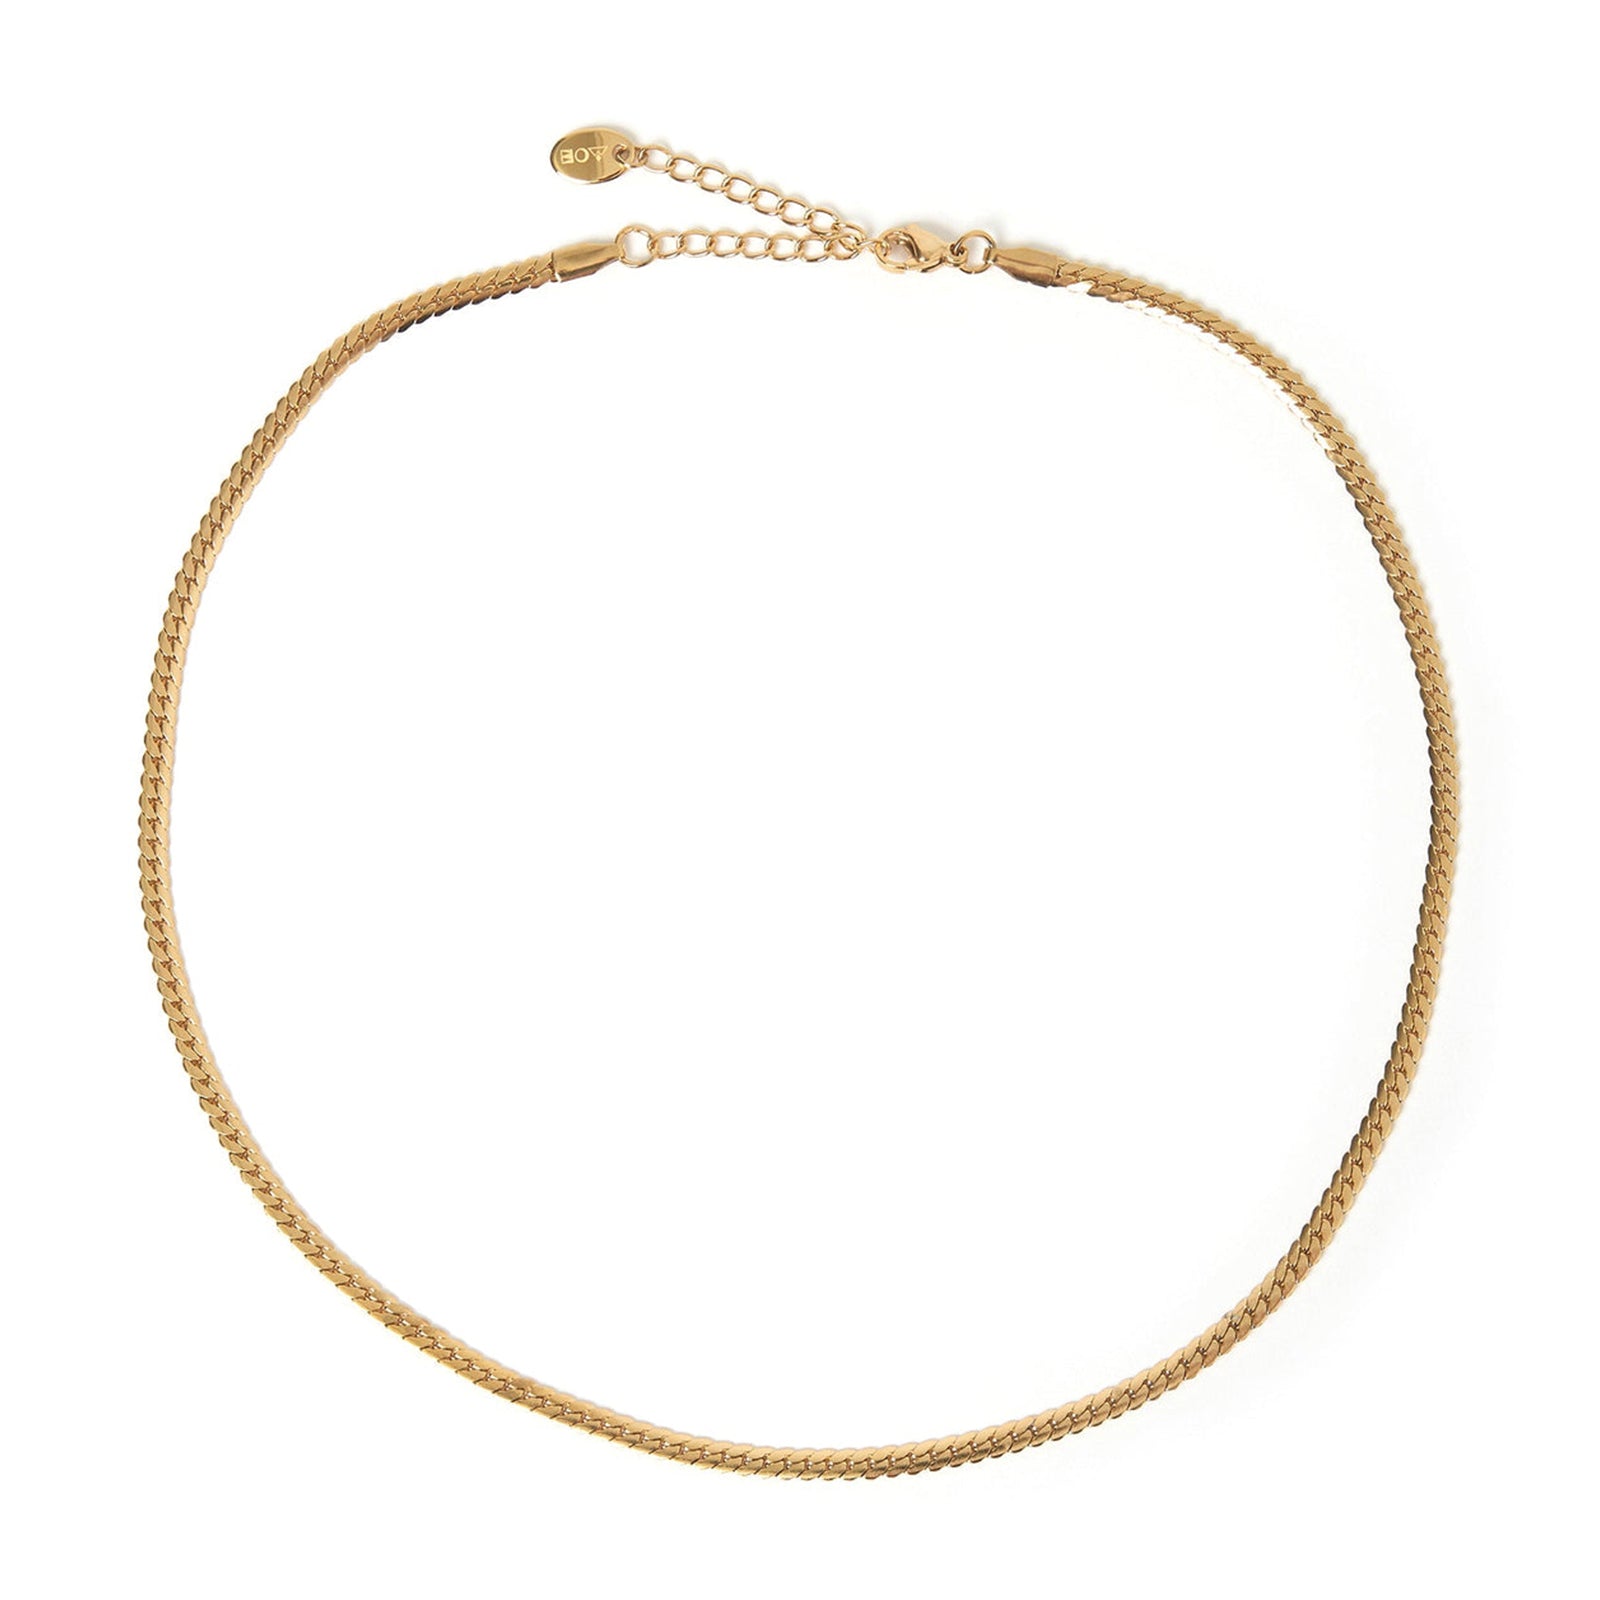 Dominique Gold Chain Necklace